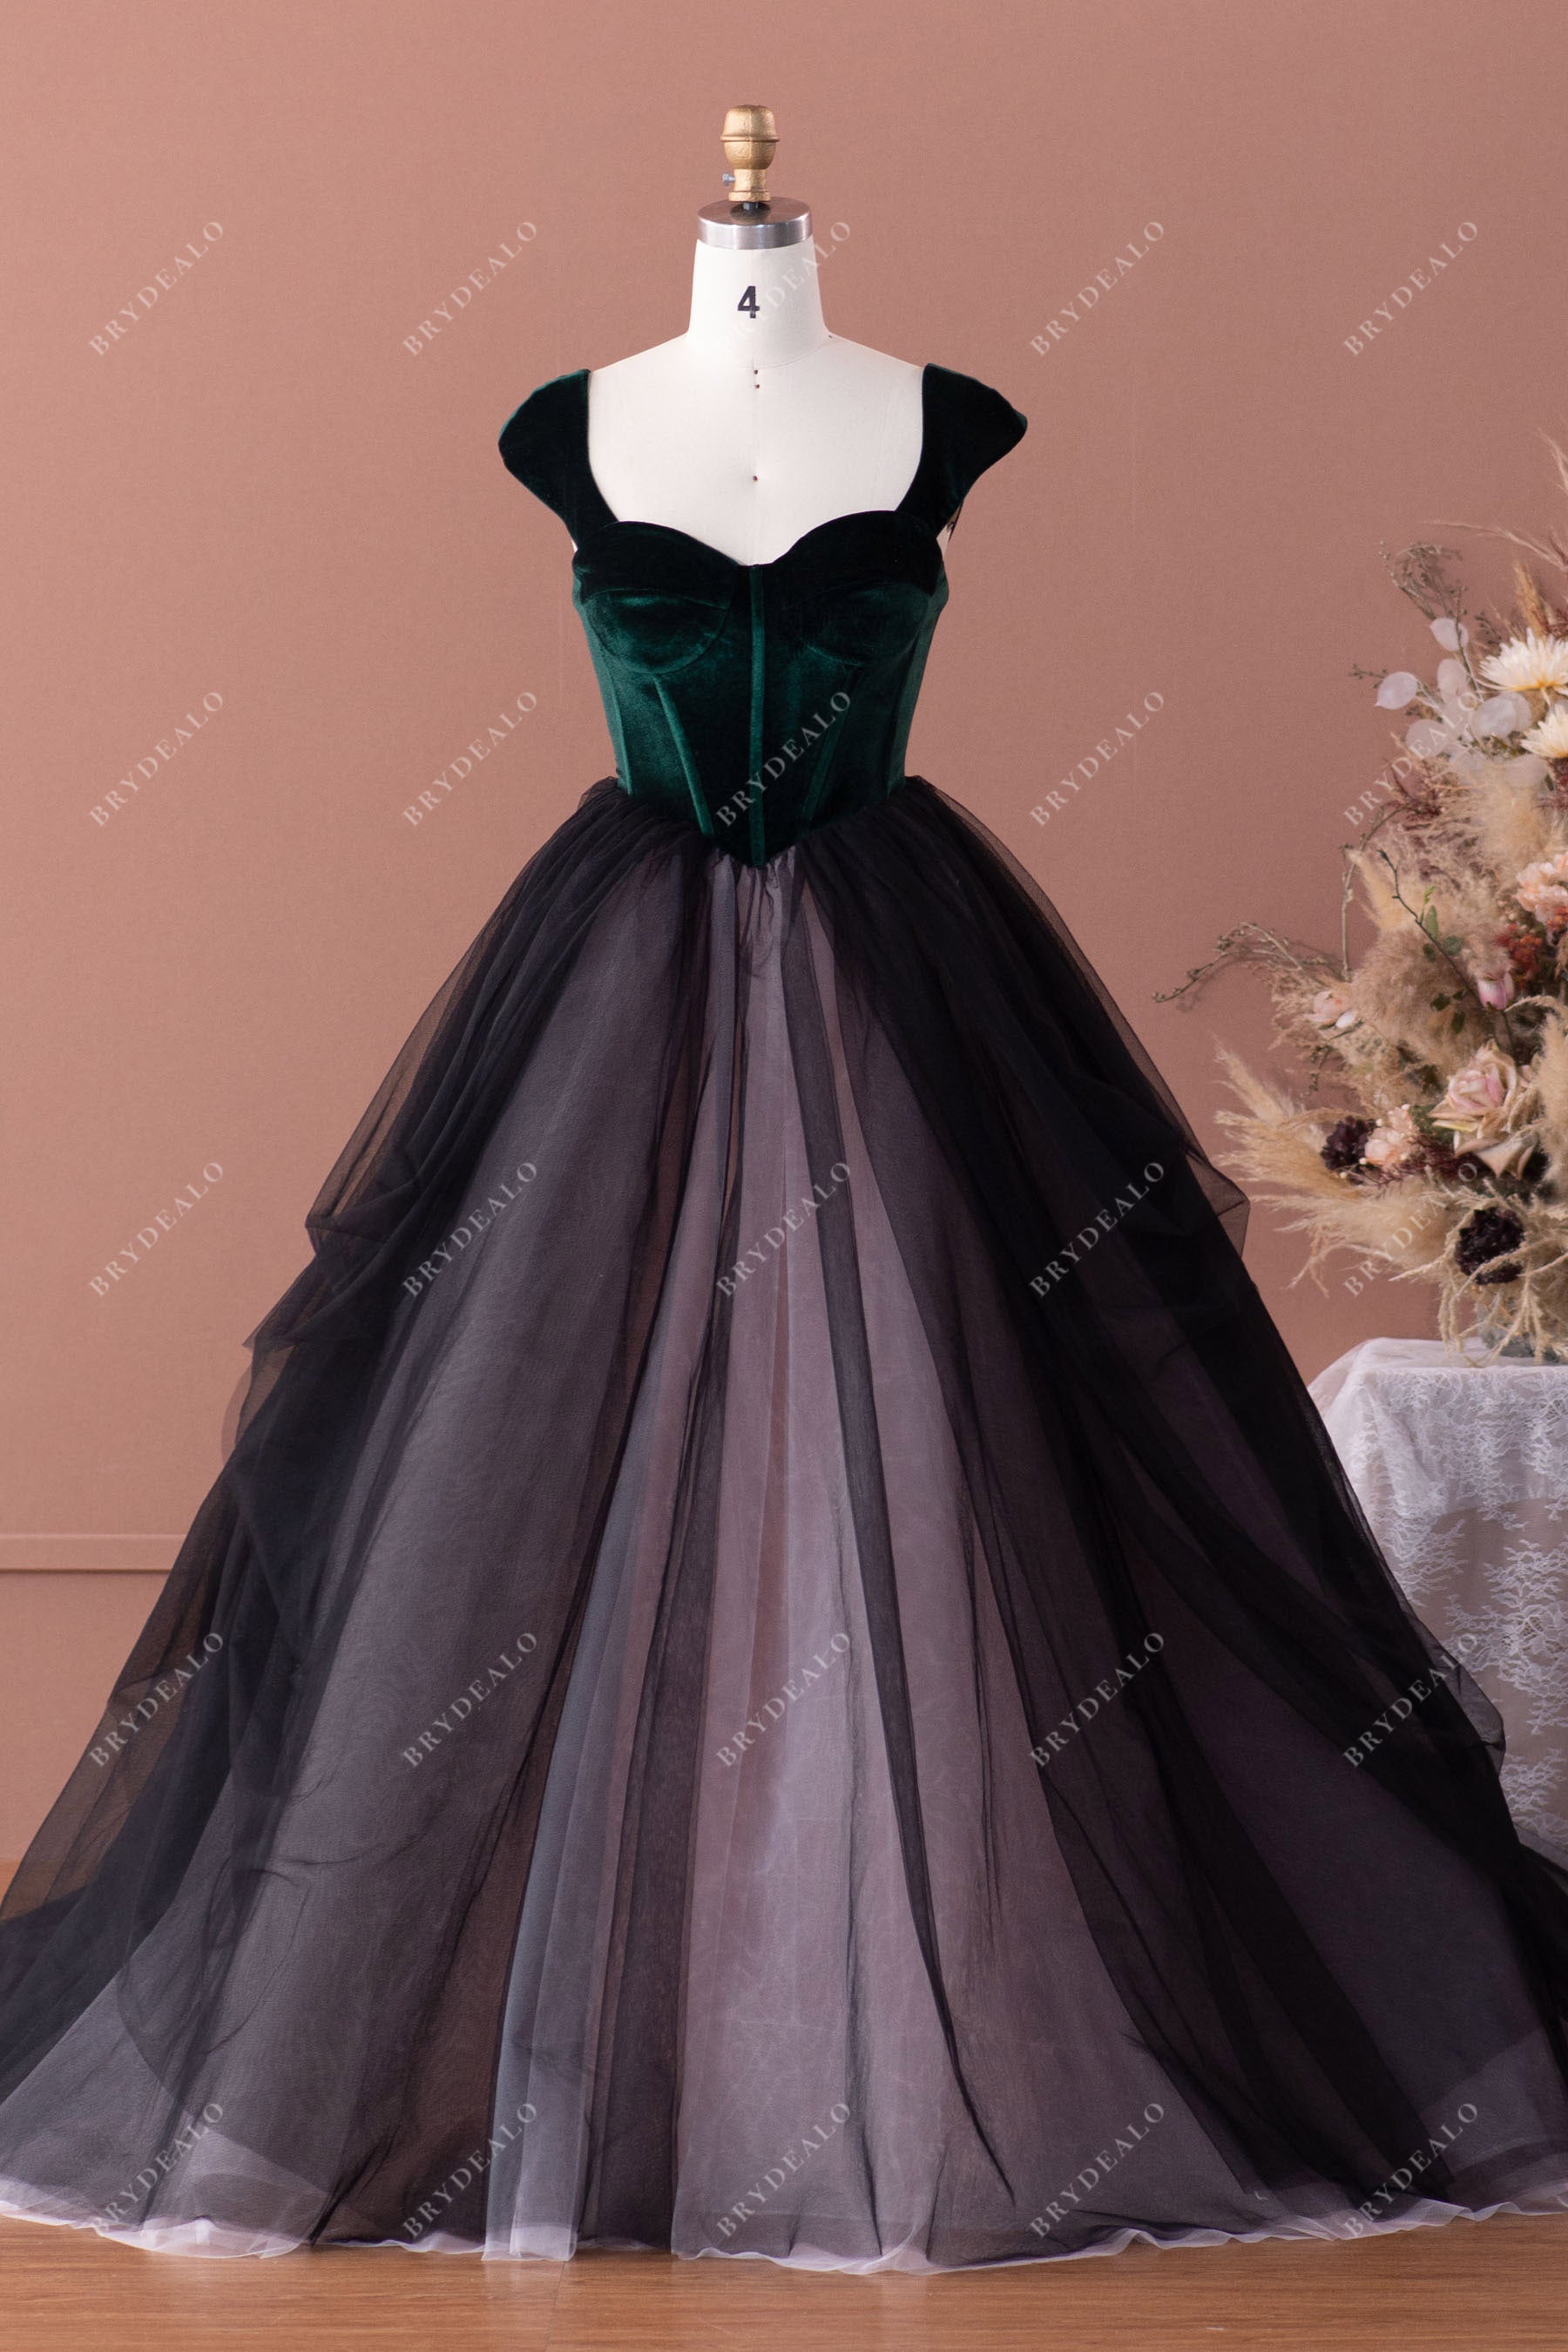 victoria velvet tulle colored ballgown wedding dress